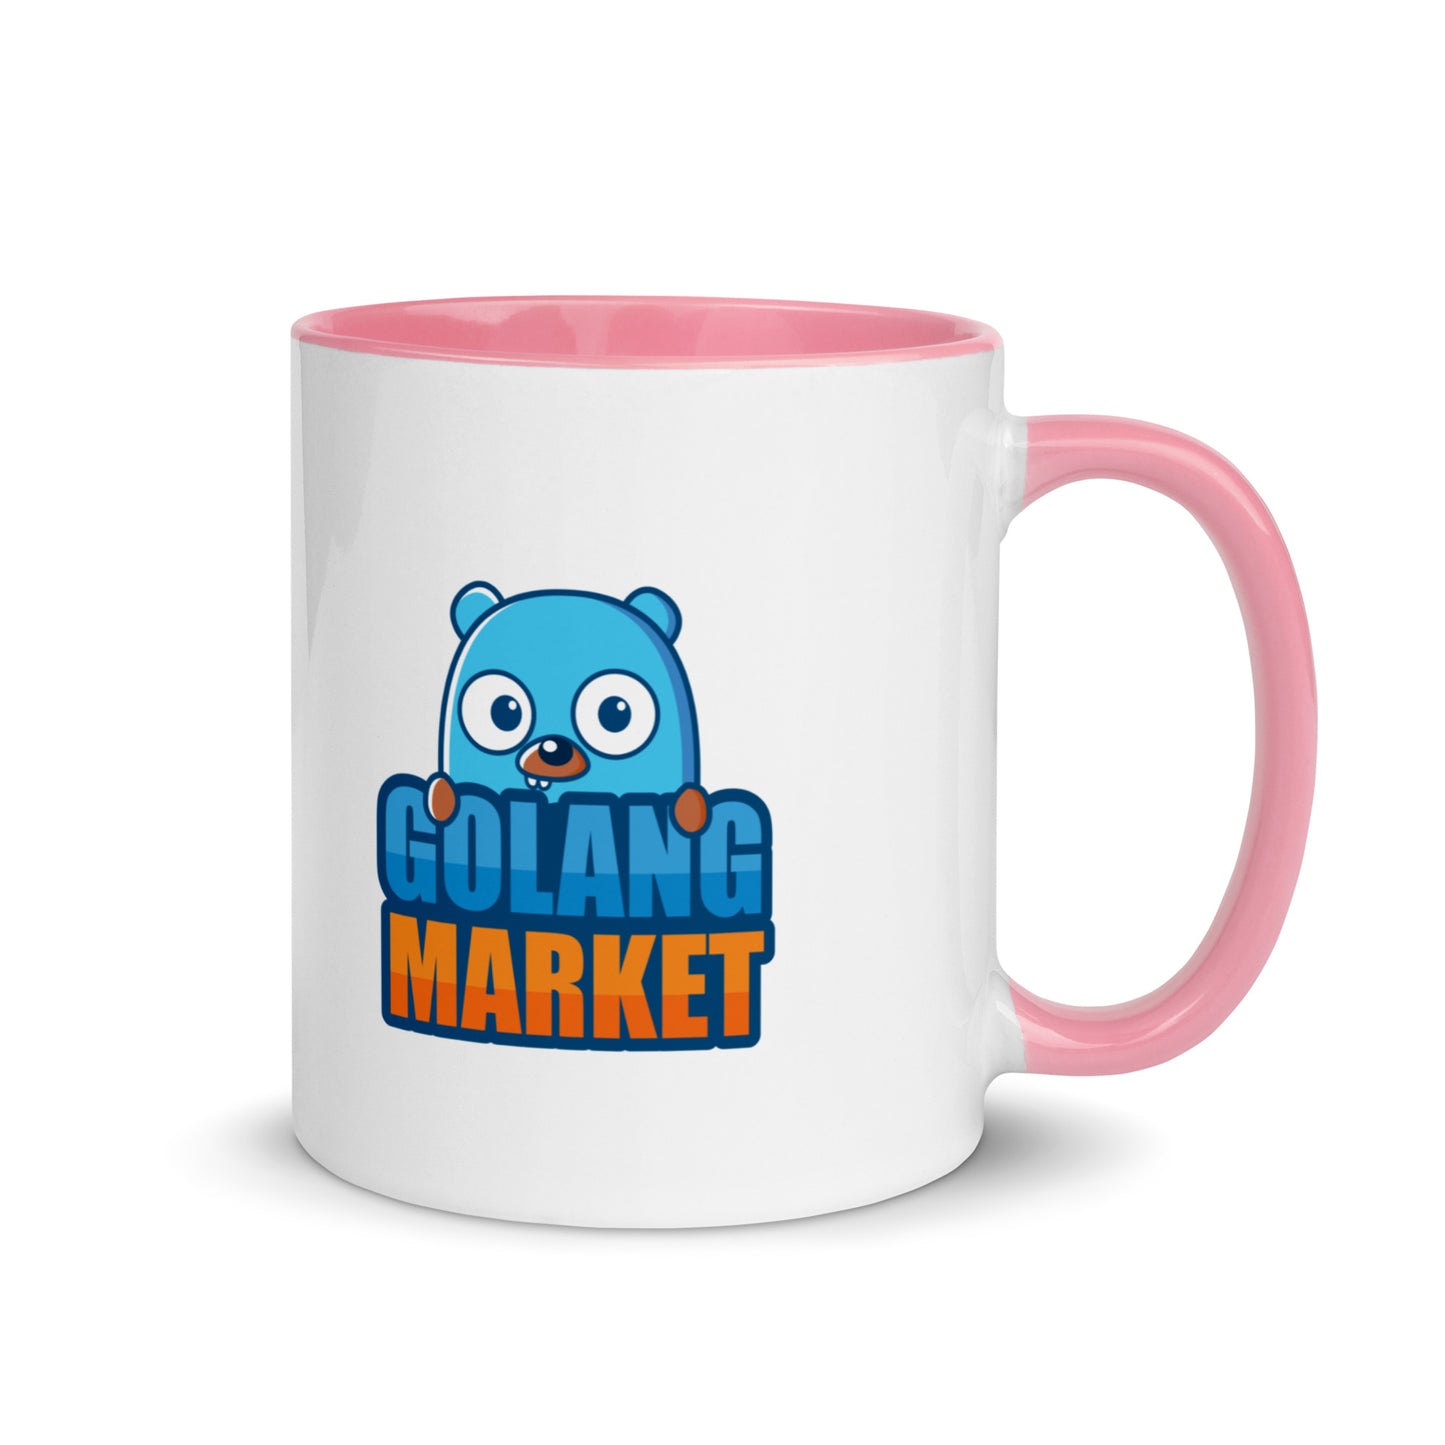 GolangMarket Hello World Mug with Color Inside